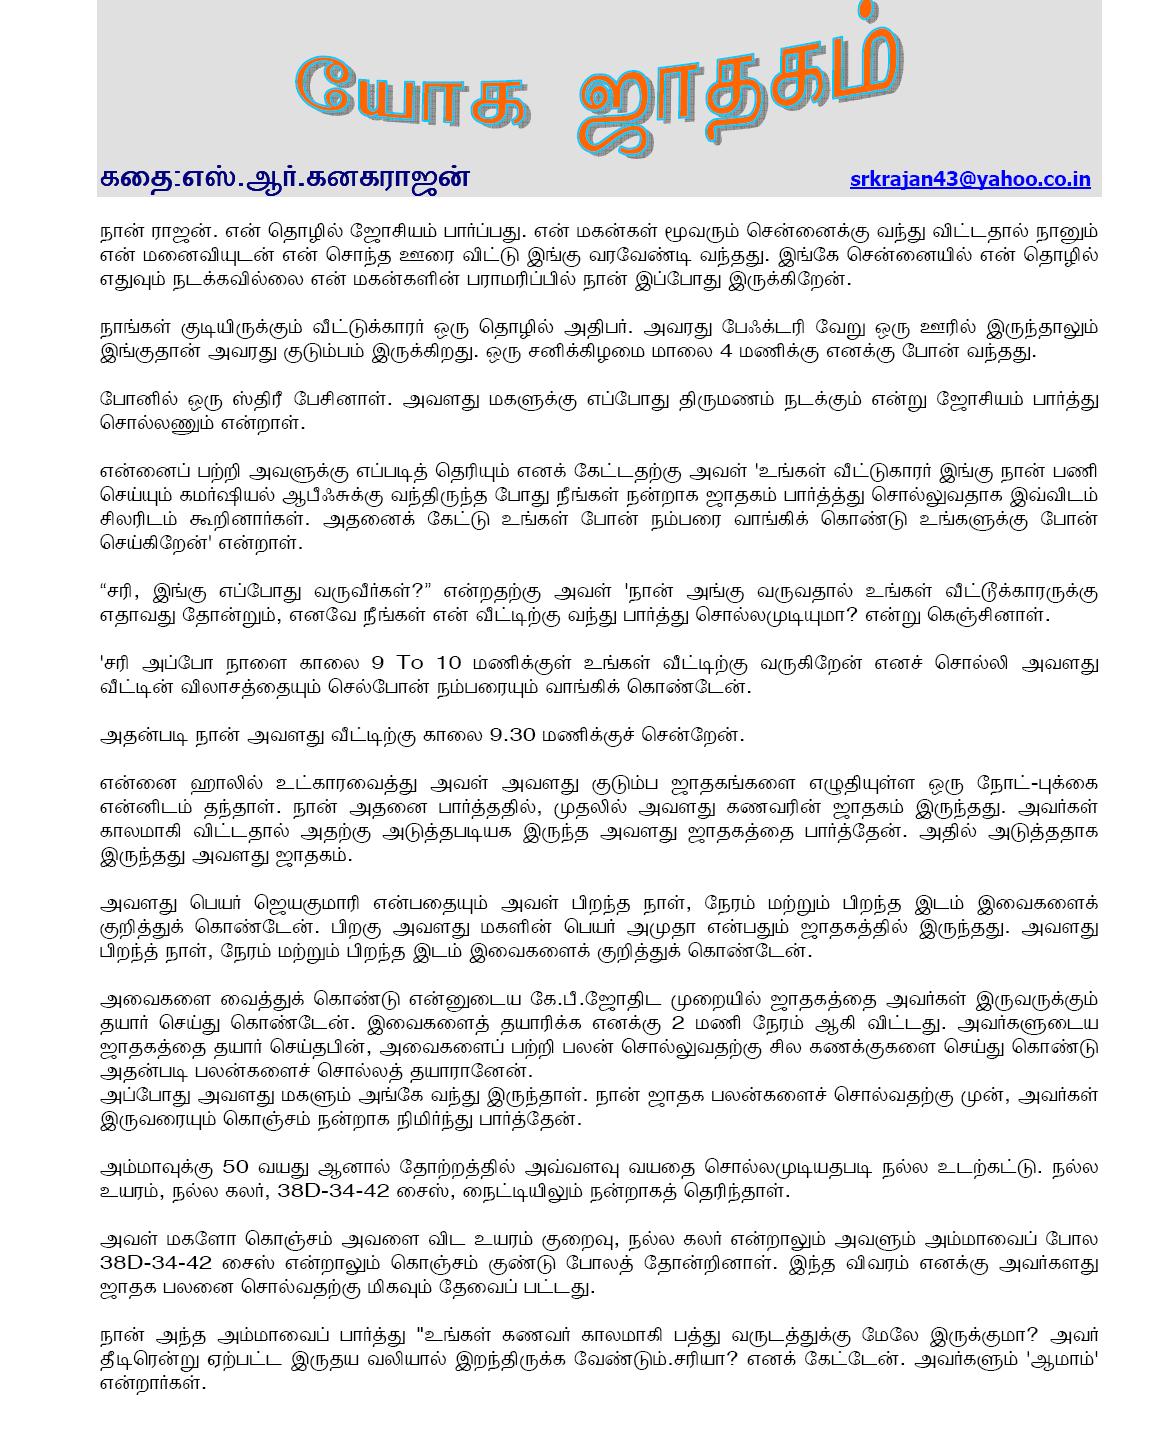 Search Results for "Tamil Kamakathaikal" - Calendar 2015